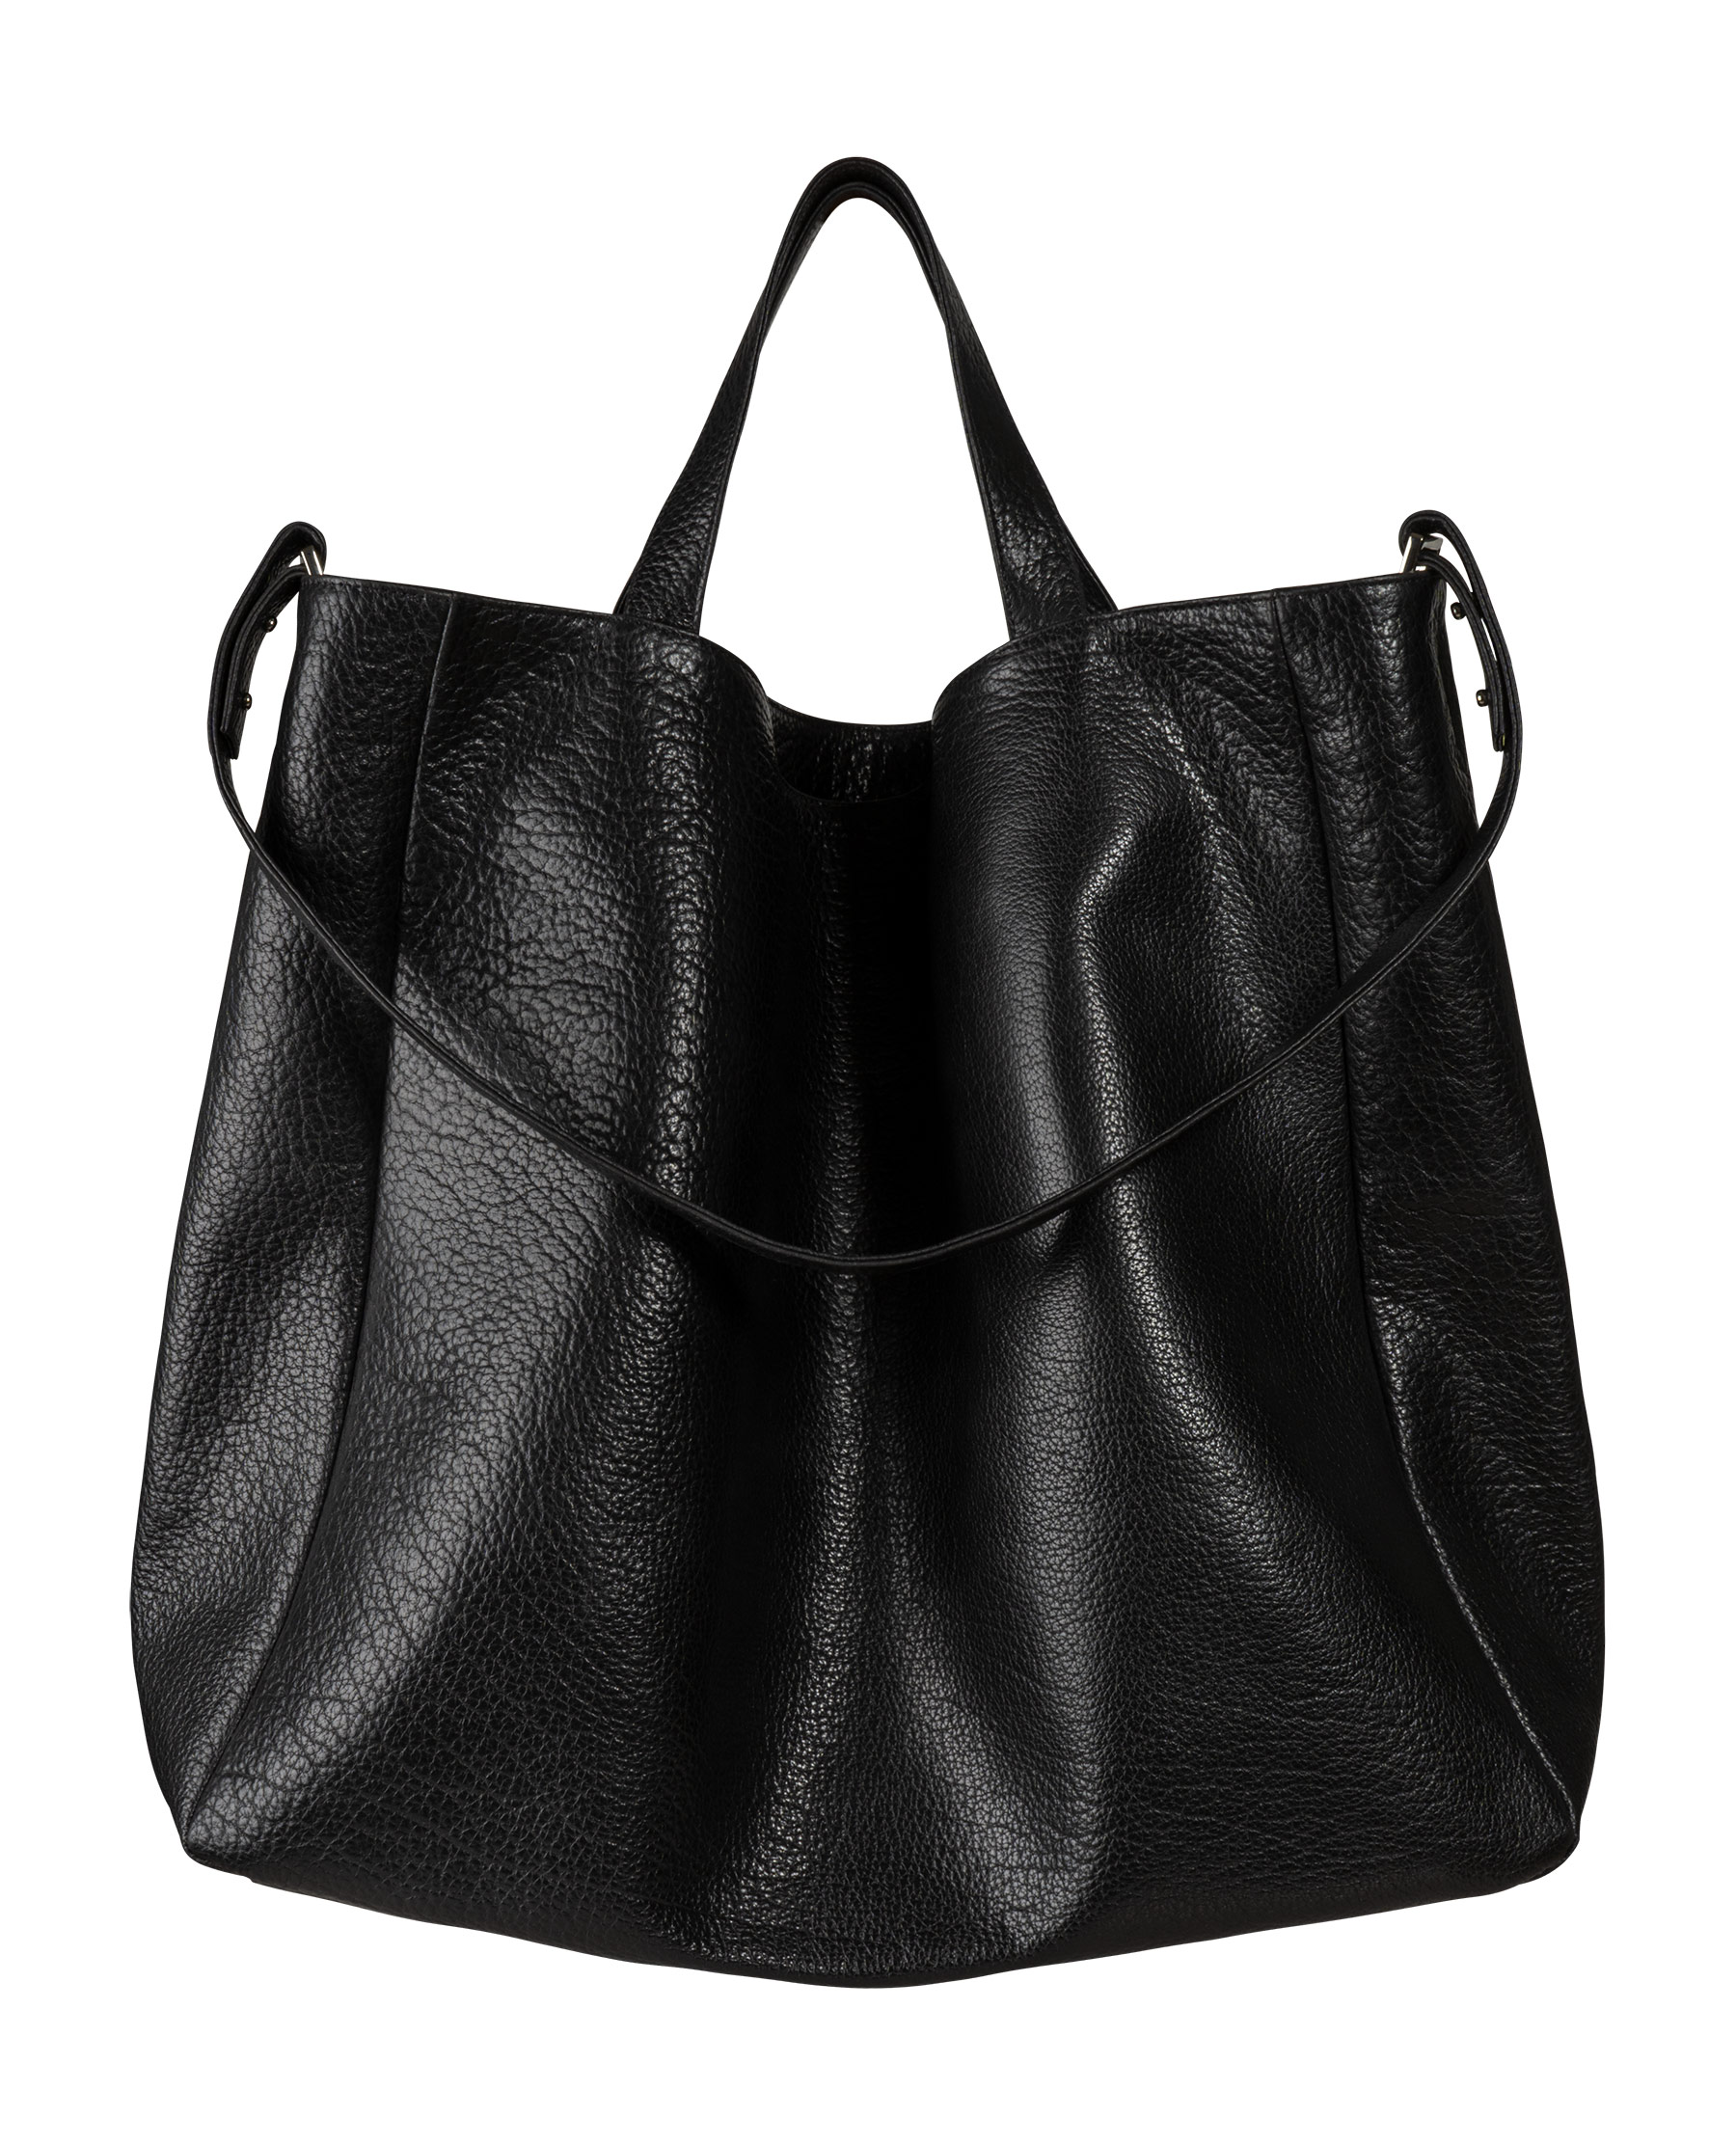 FABER TWO shoulder bag in black bison leather | TSATSAS